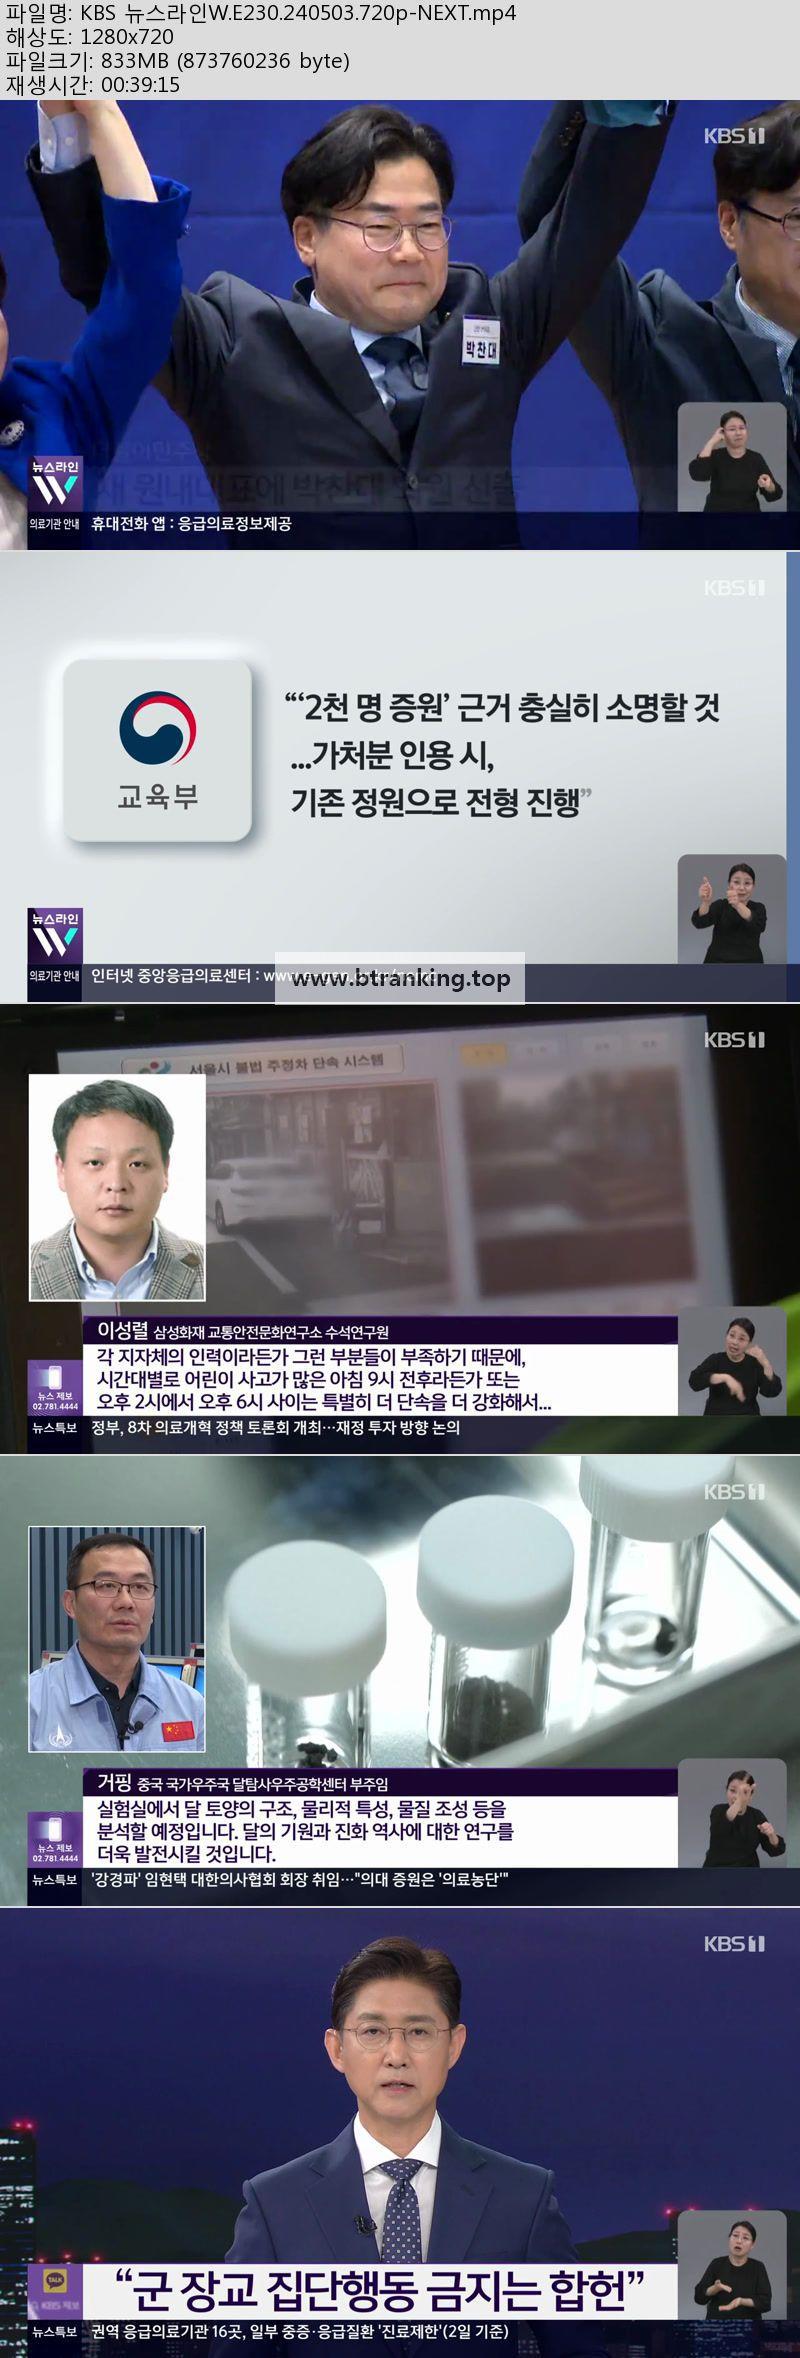 KBS 뉴스라인W.E230.240503.720p-NEXT